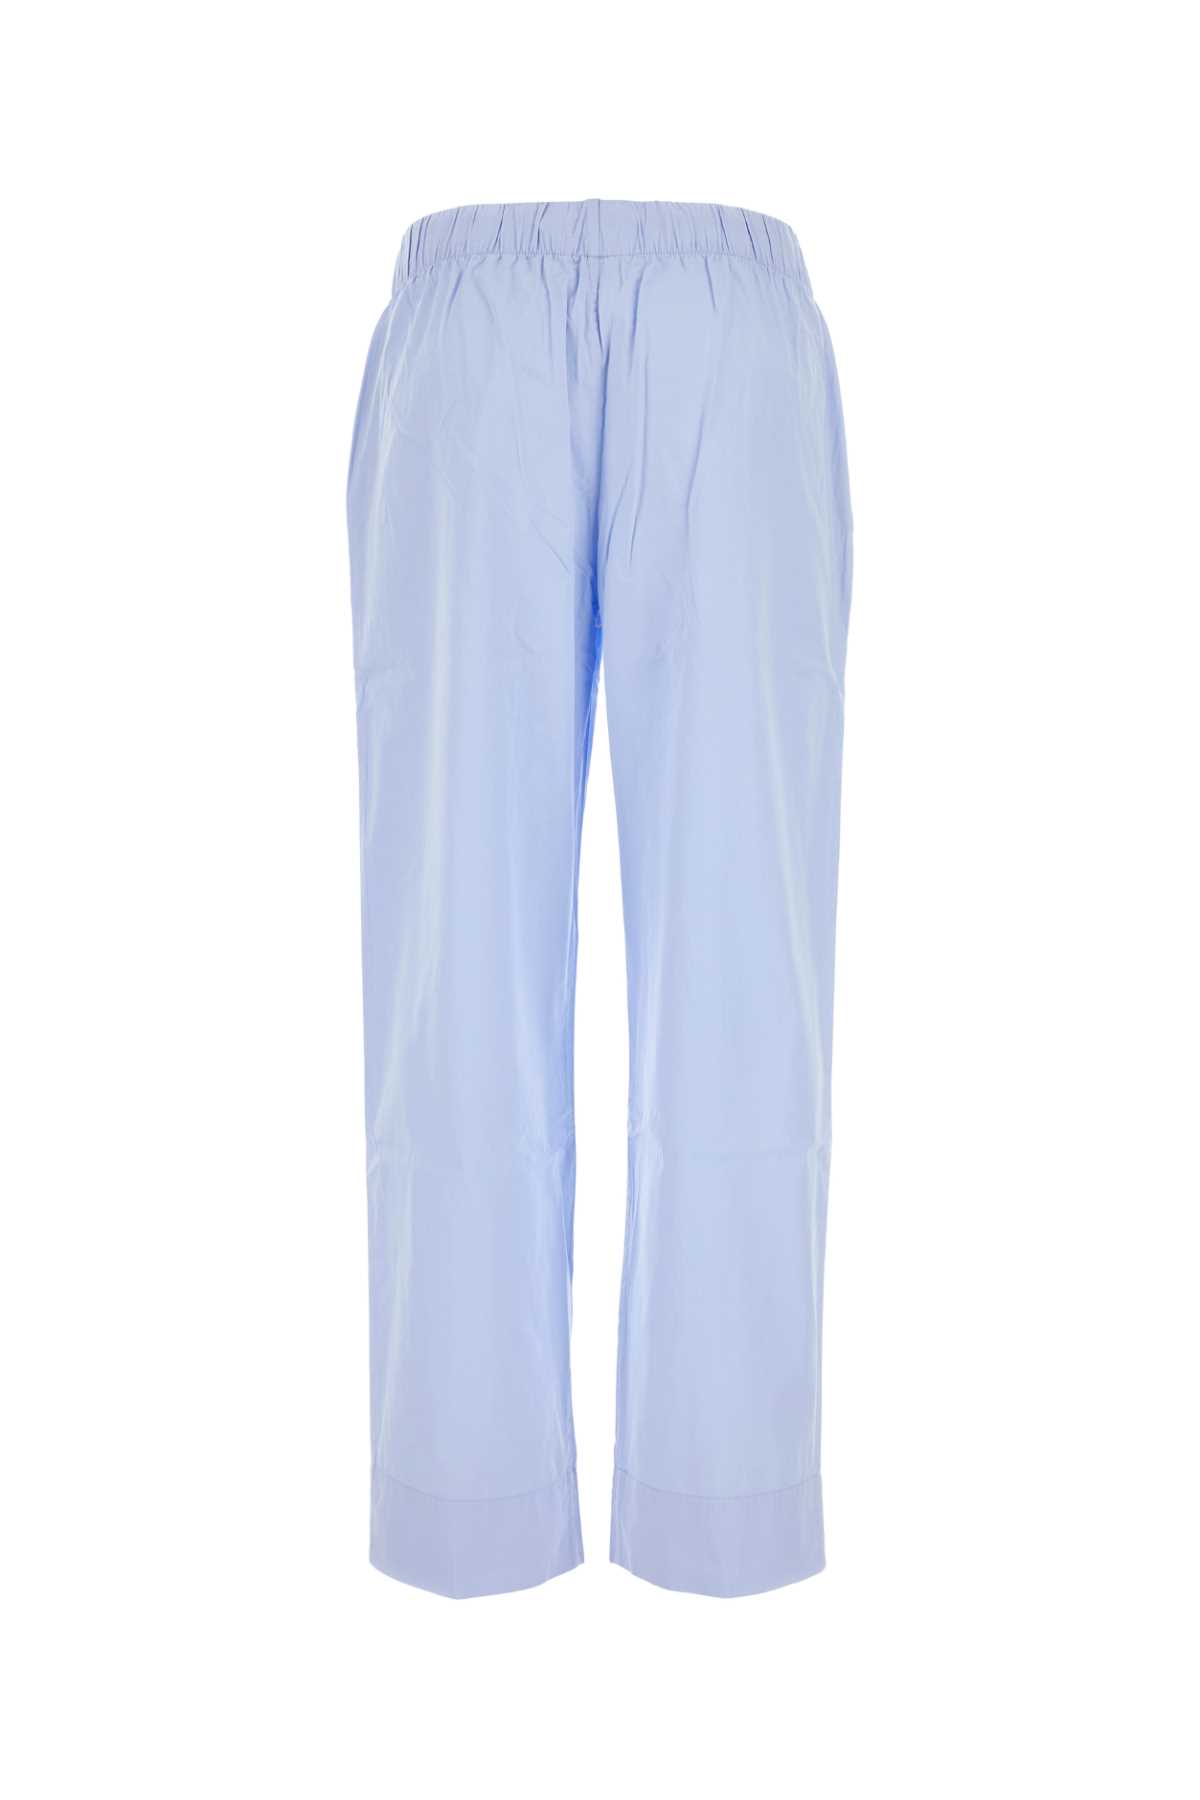 Tekla Light Blue Cotton Pyjama Pant In Shirtblue